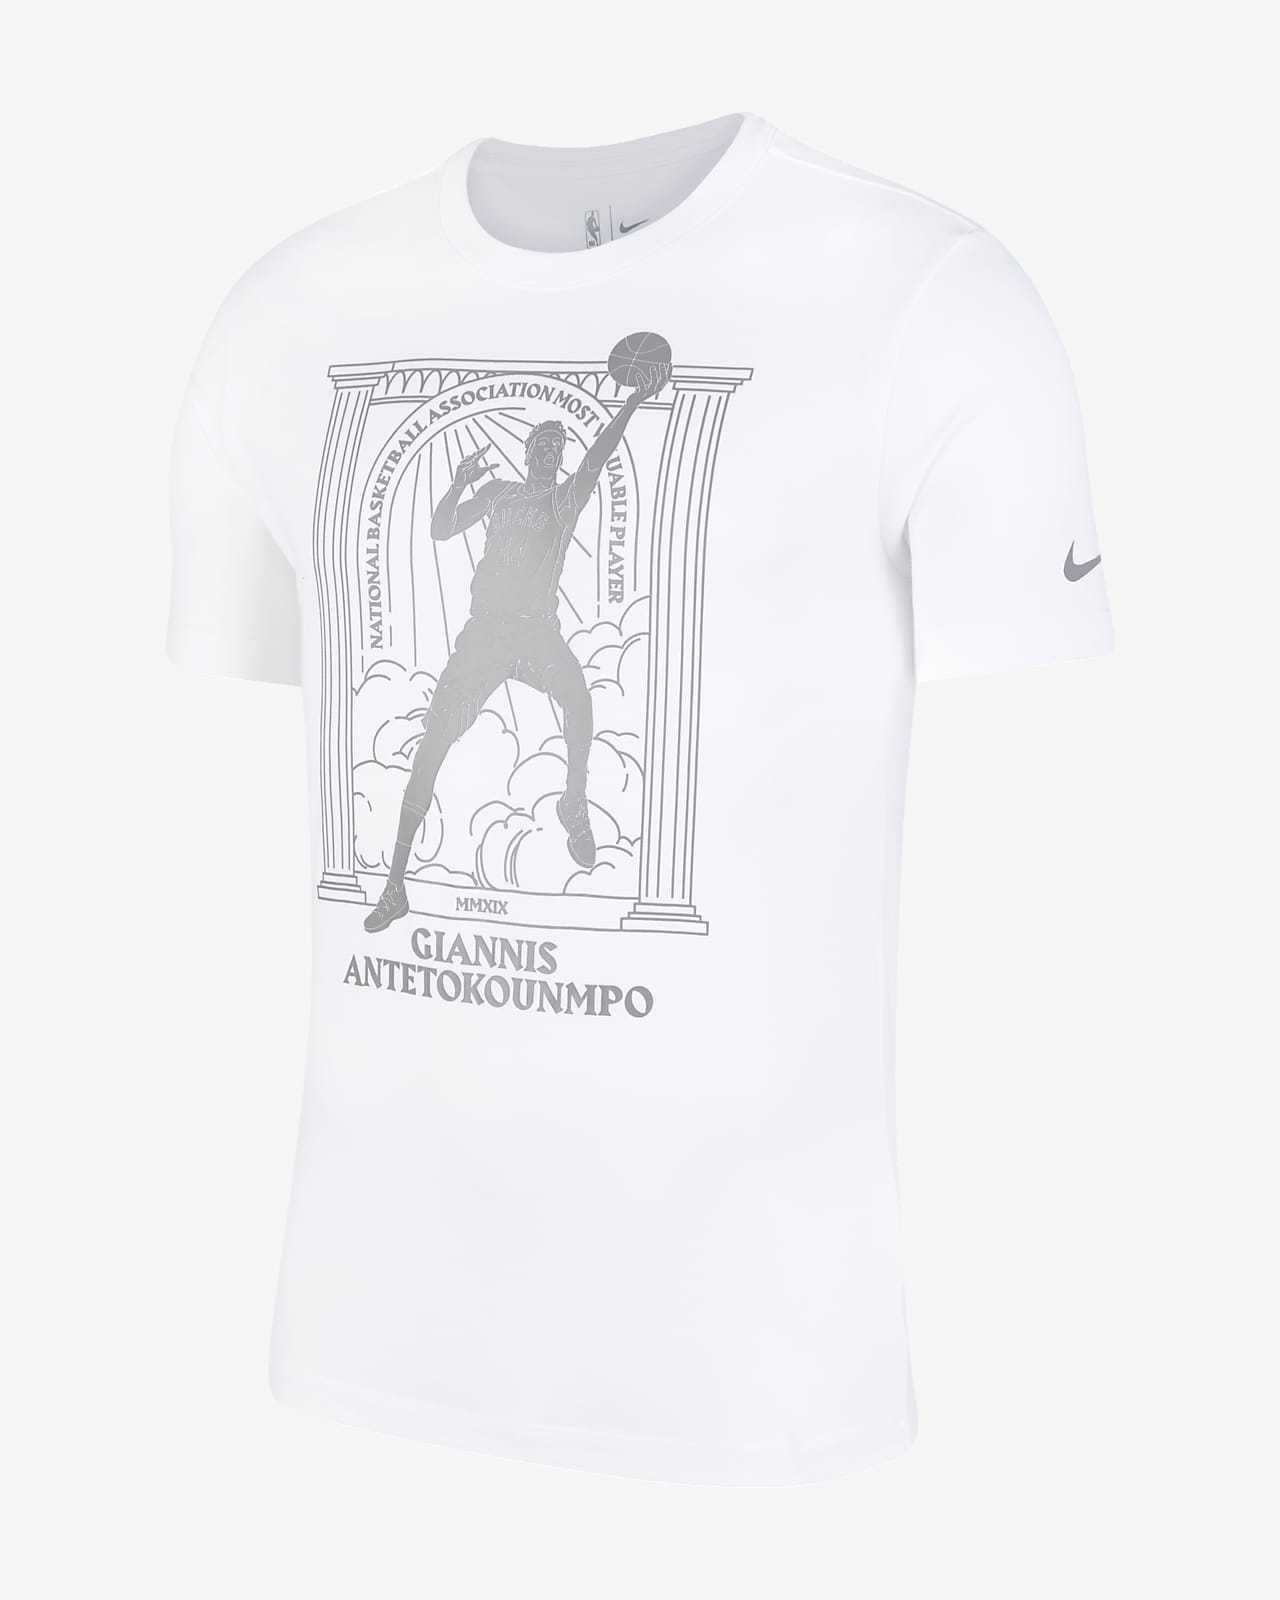 Giannis Antetokounmpo MVP shirt - Kingteeshop